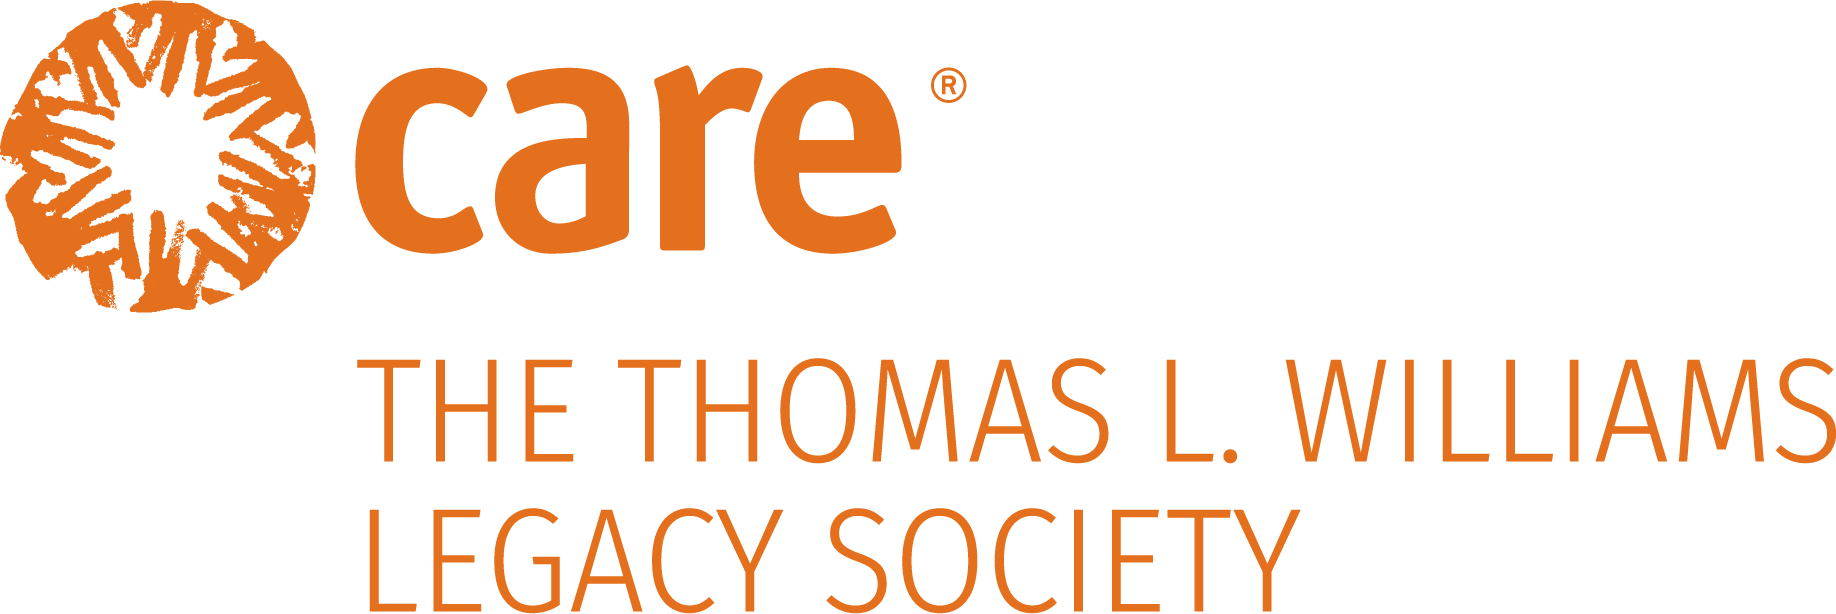 CARE - The Thomas L Williams Legacy Society